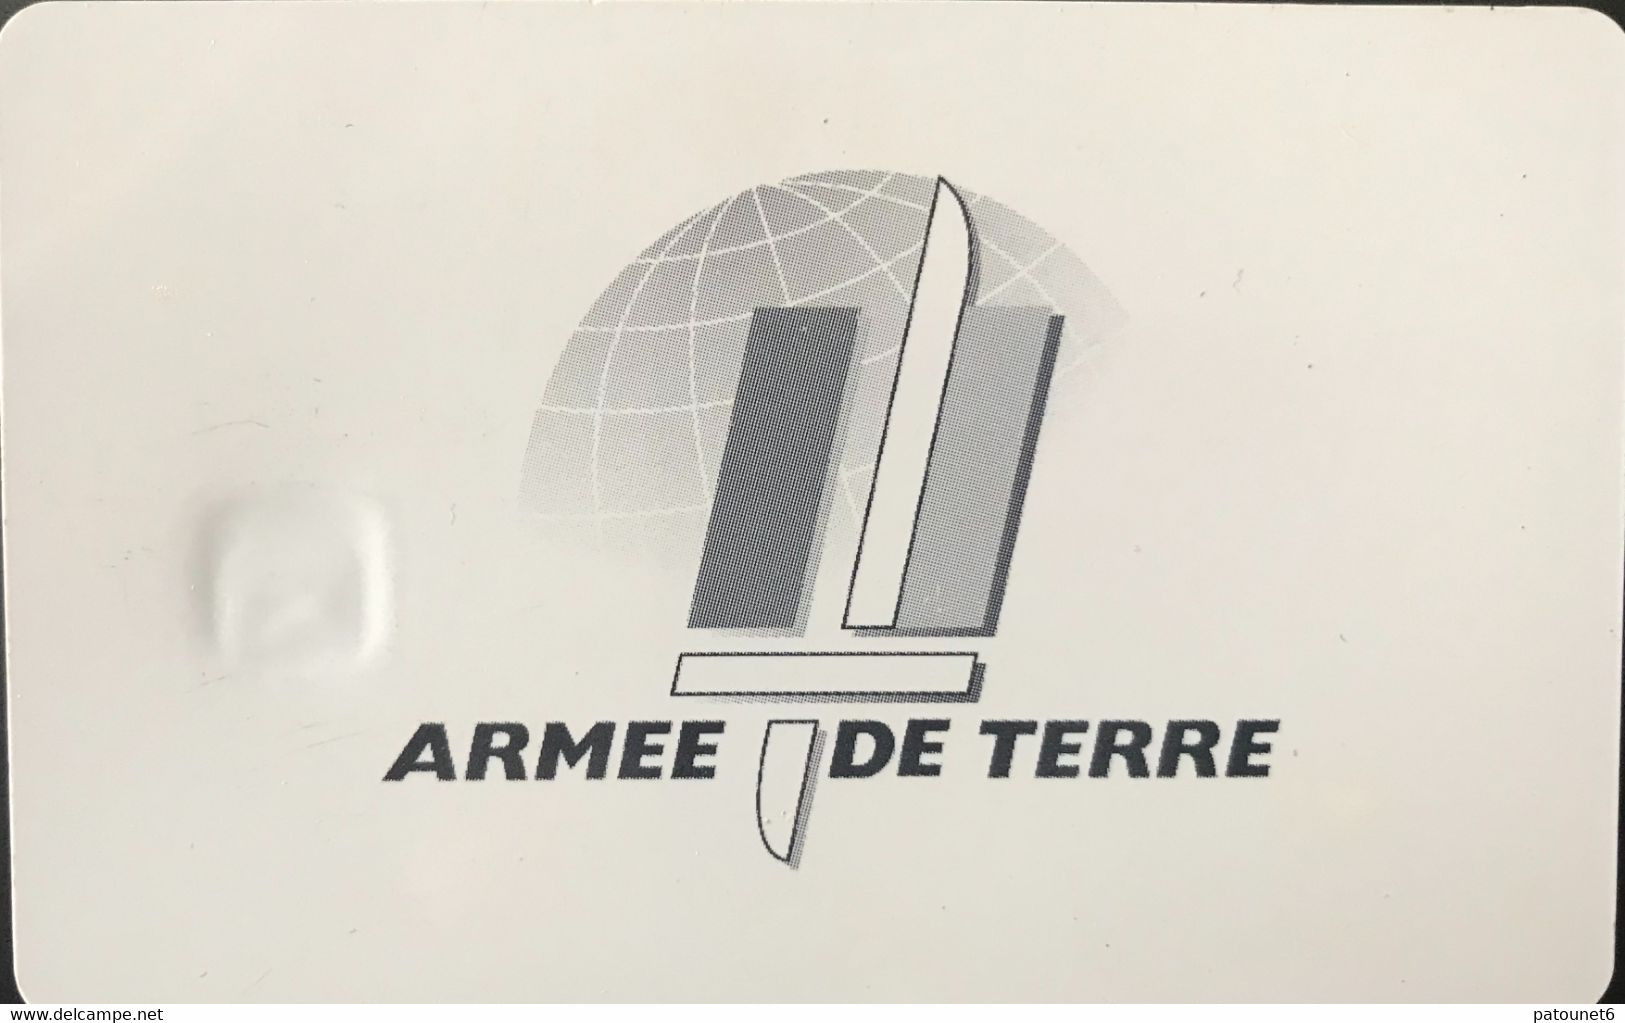 FRANCE  -  ARMEE  -  Phonecard  -  ECOPHONING  -  ARMEE DE TERRE  -  Vert - 150 FF -  Kaarten Voor Militair Gebruik